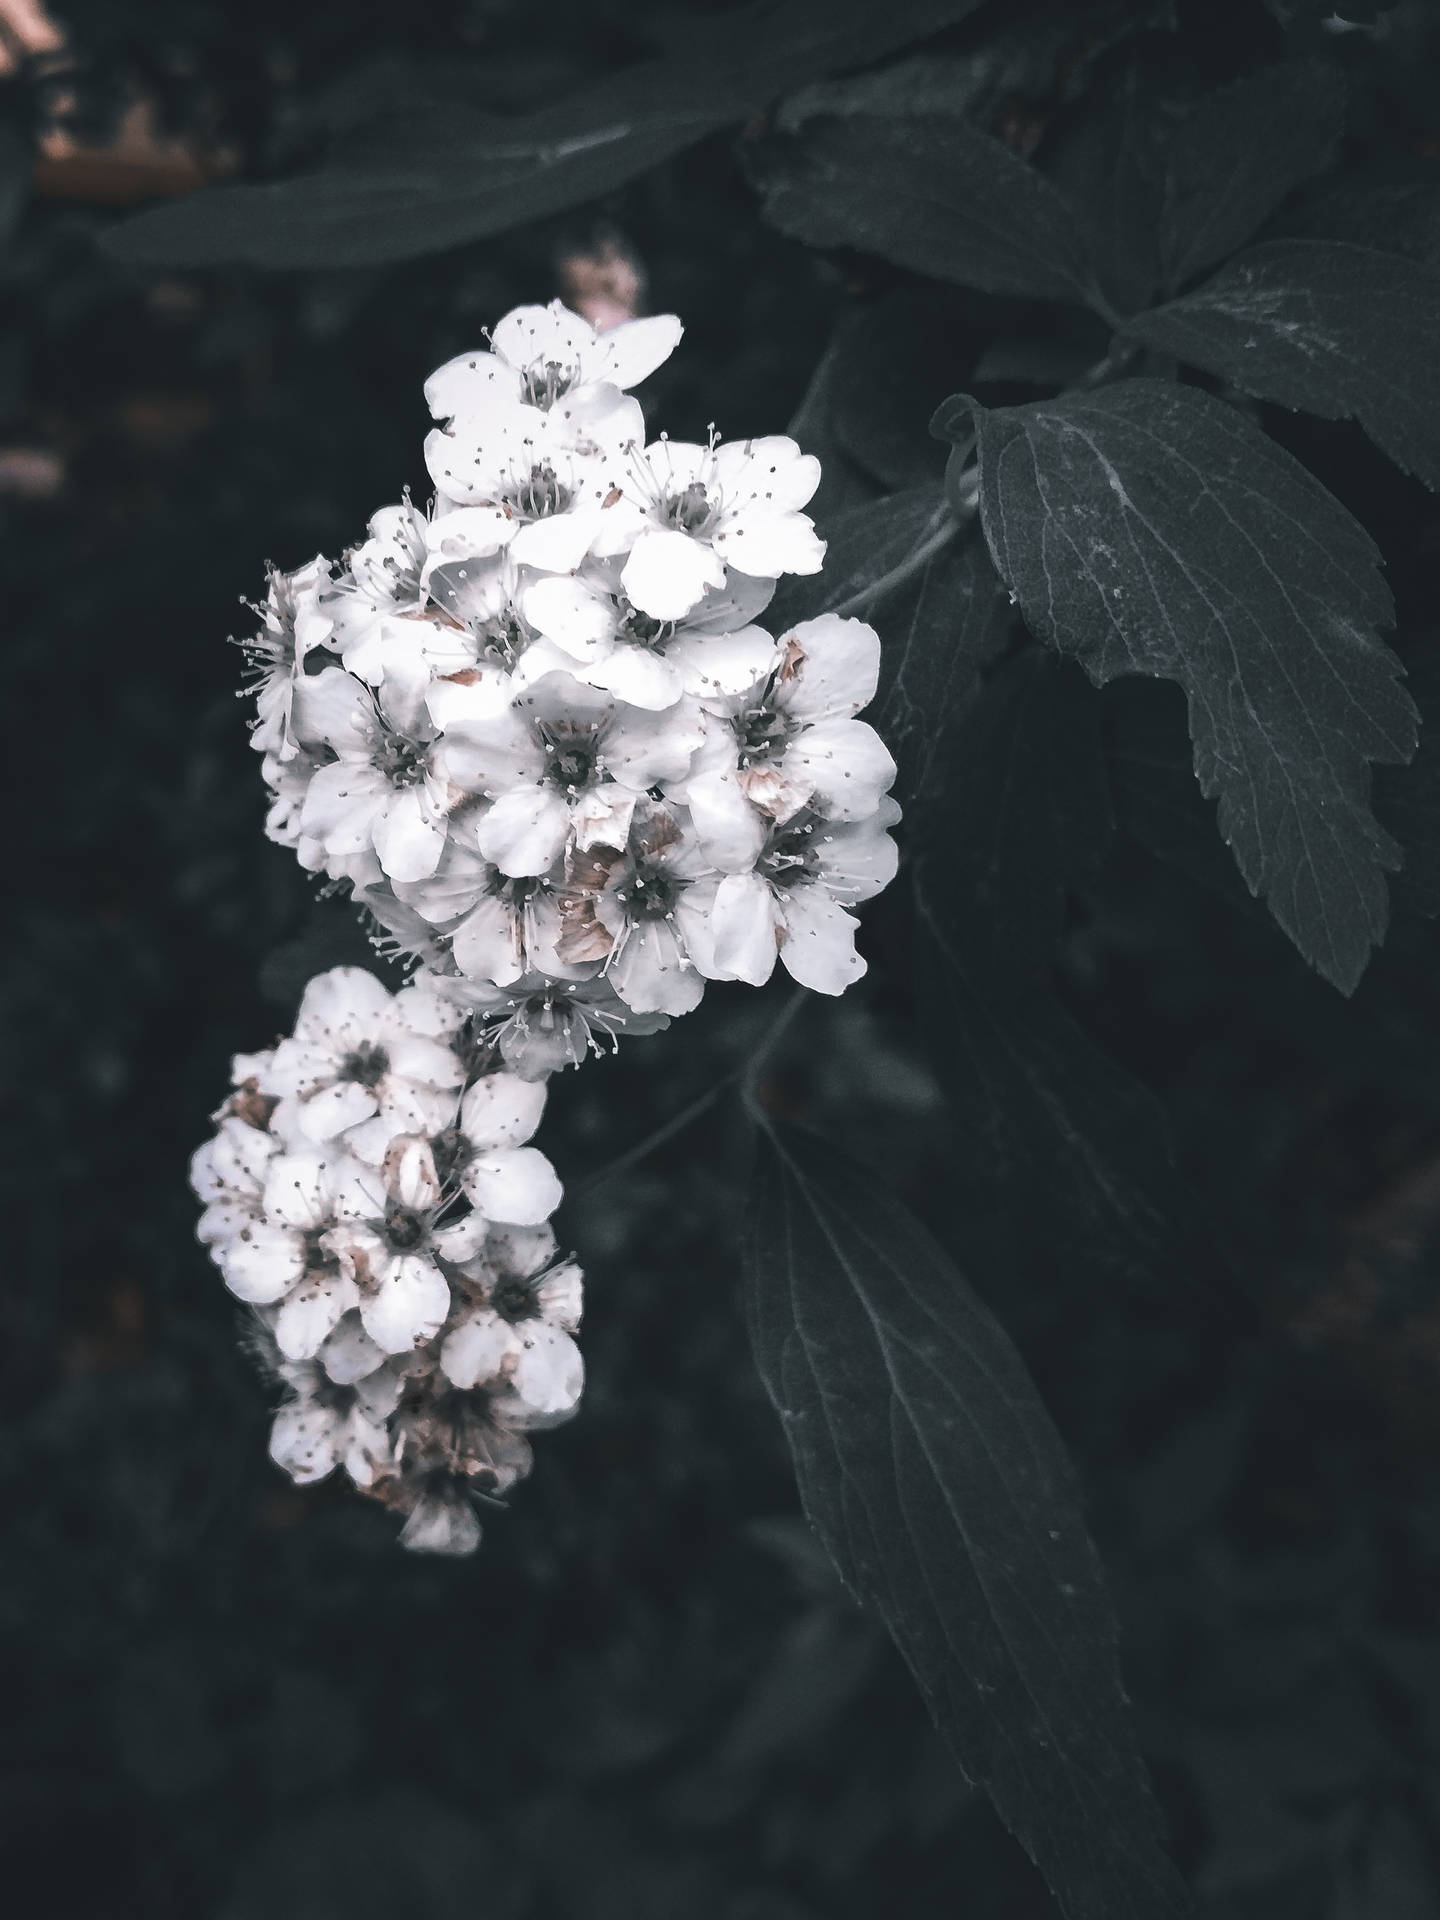 White Aesthetic Flowers Photograph Wallpaper